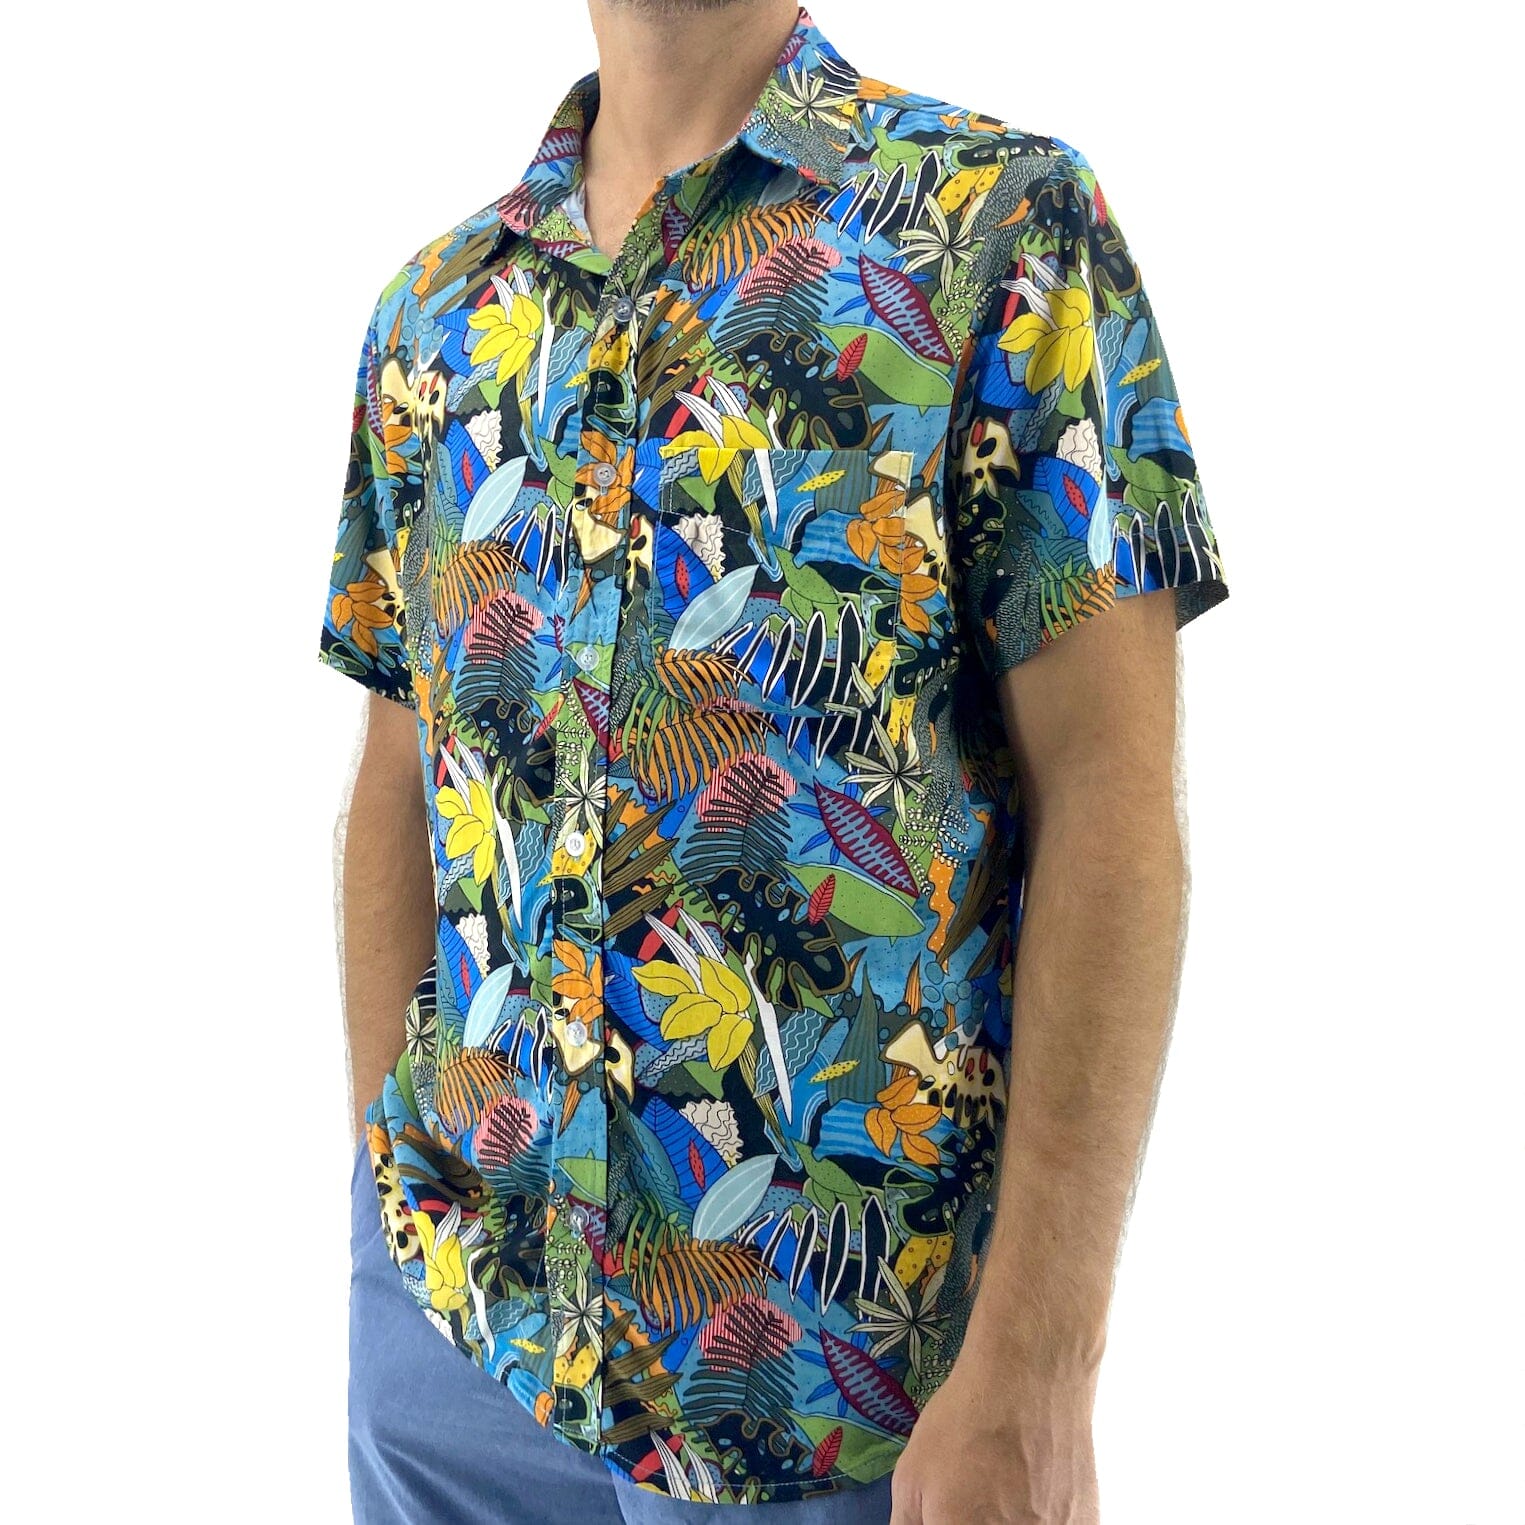 Mens Unique Vibrant Colorful Abstract Floral Leaf Print Hawaiian Shirt